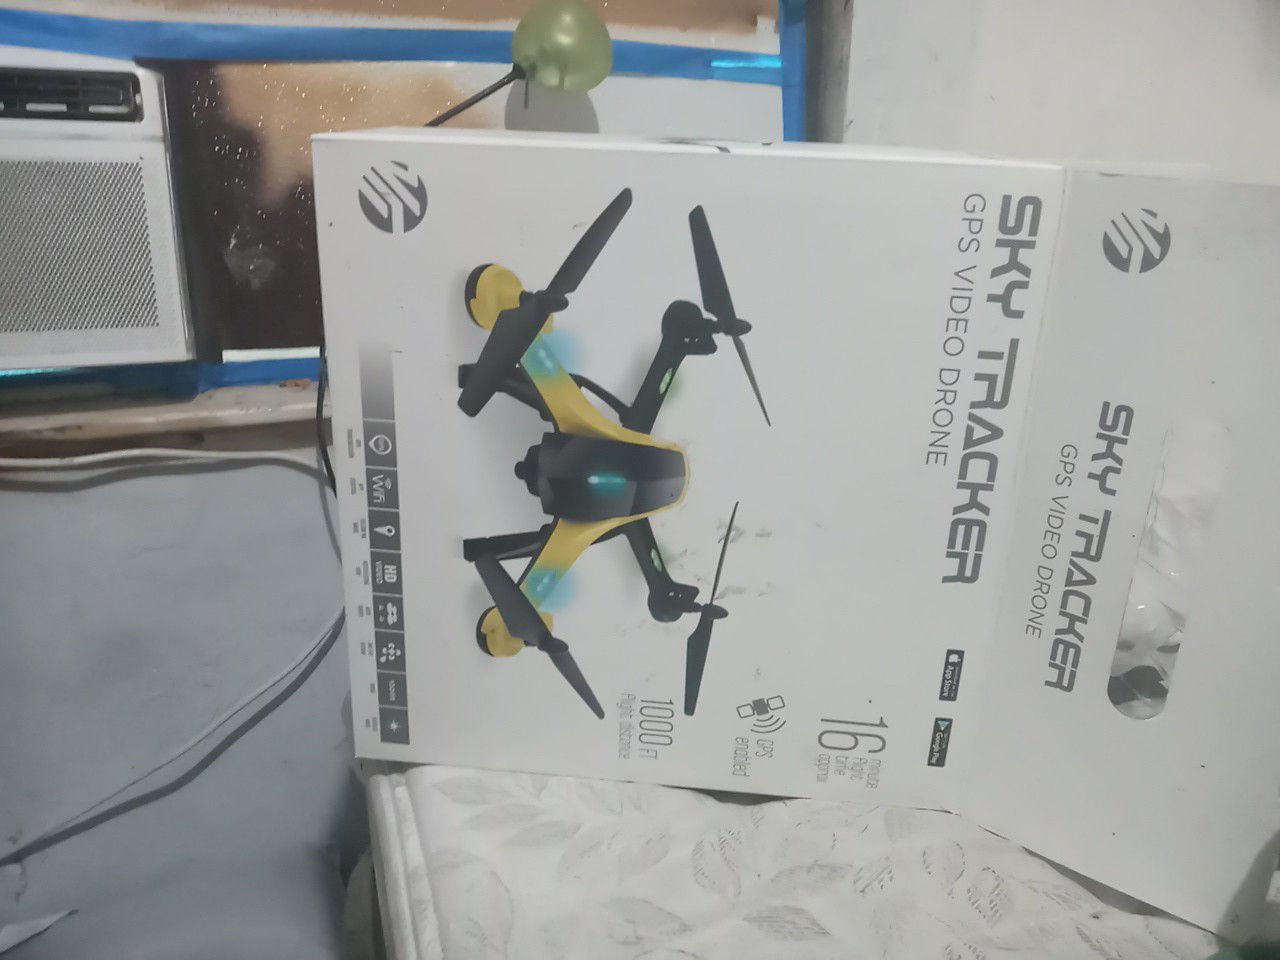 Sky tracker drone